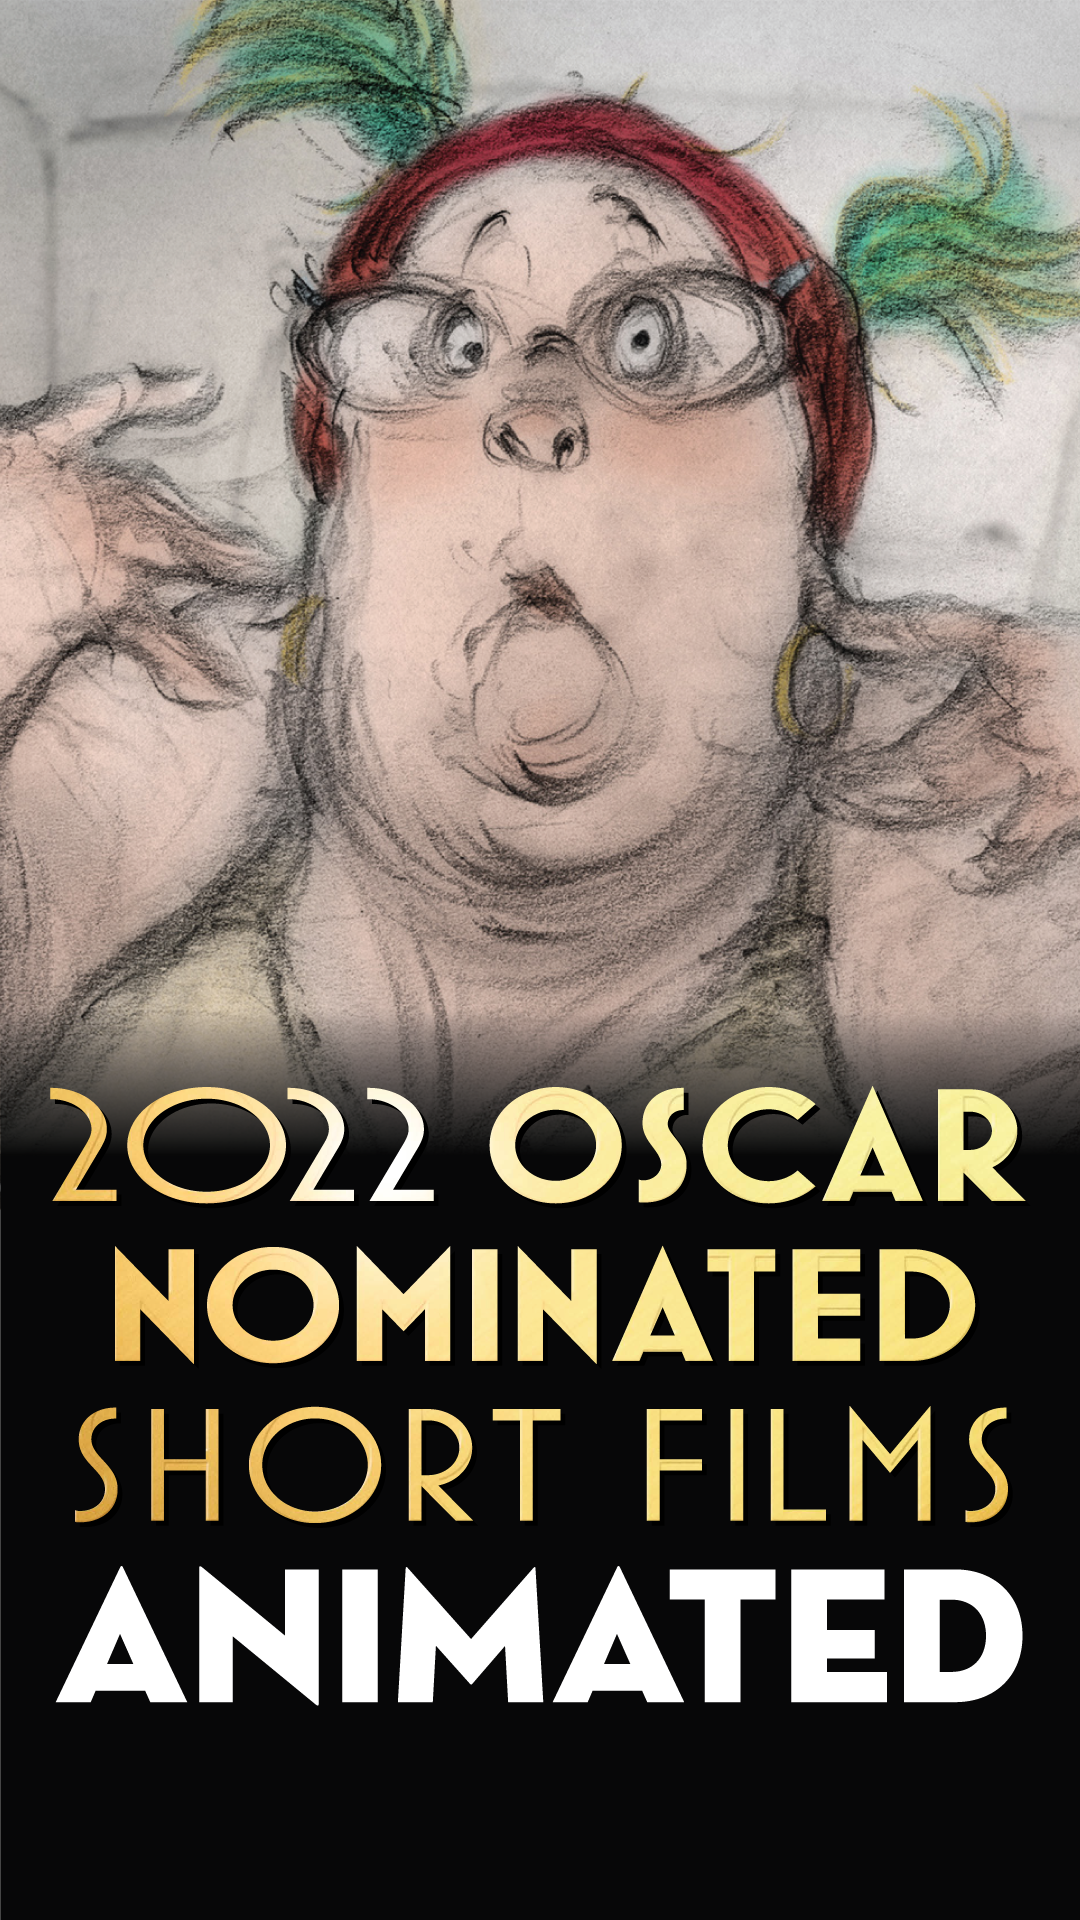 Showtime for 2022 Oscar-Nominated Shorts - Animated playing Mar 1th, 2022  at 6:30 PM - Princess Original | Playhouse Cinema